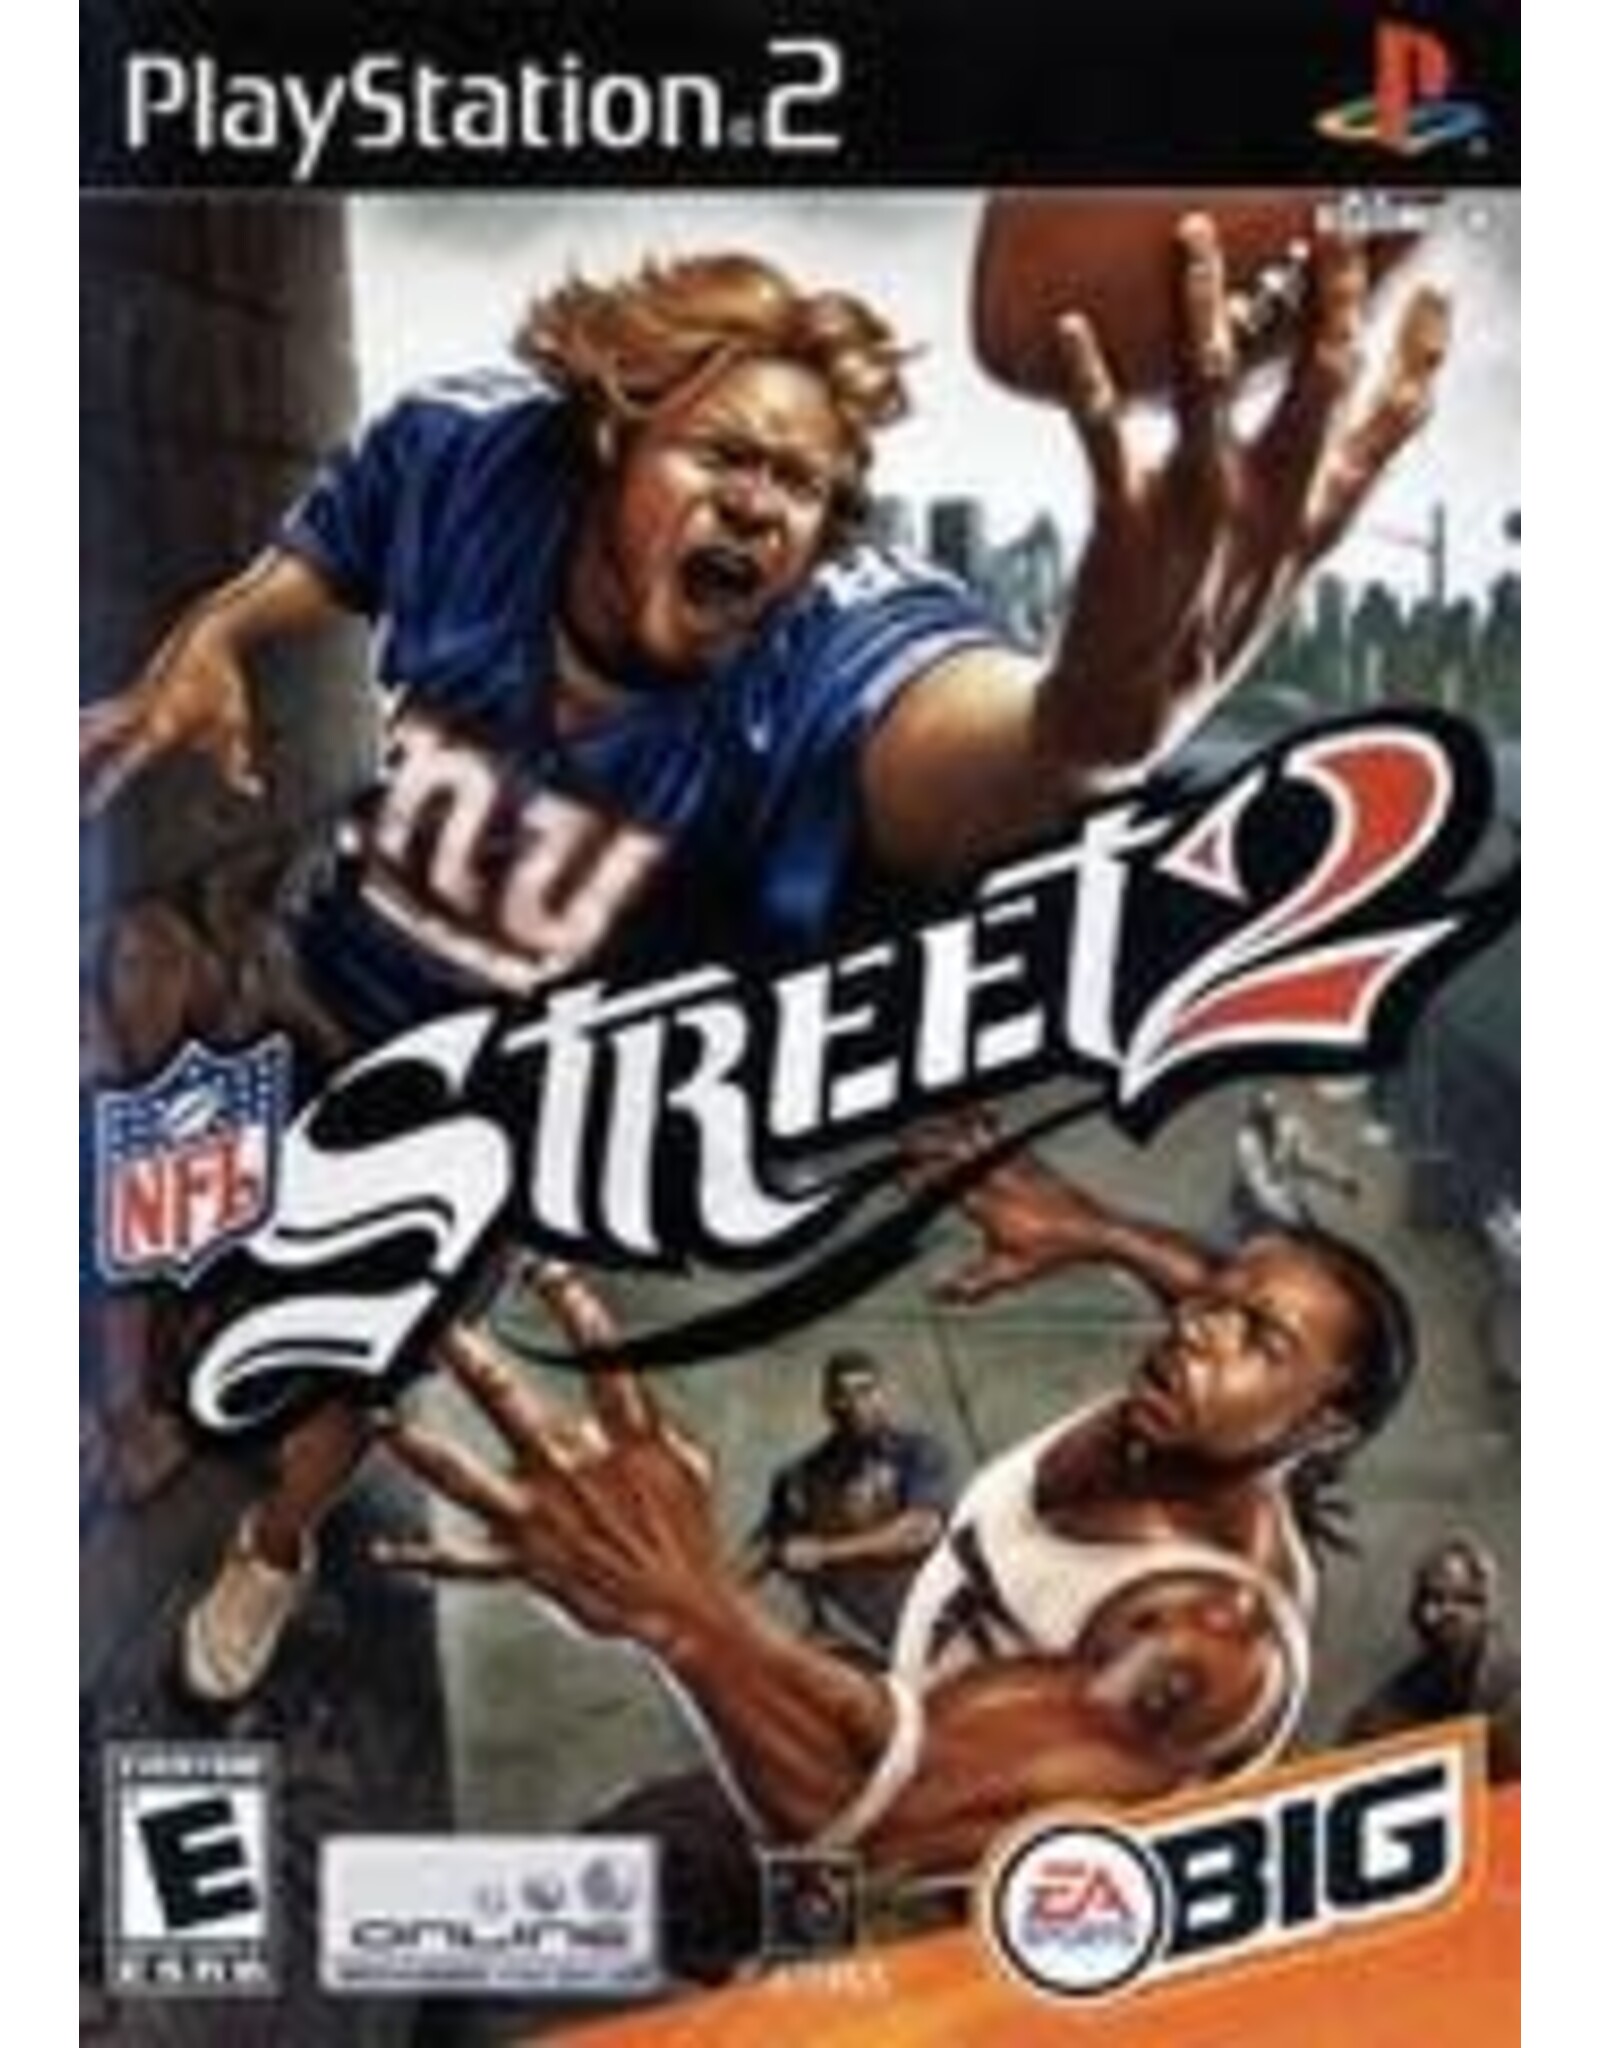 Playstation 2 NFL Street 2 (Used, No Manual)